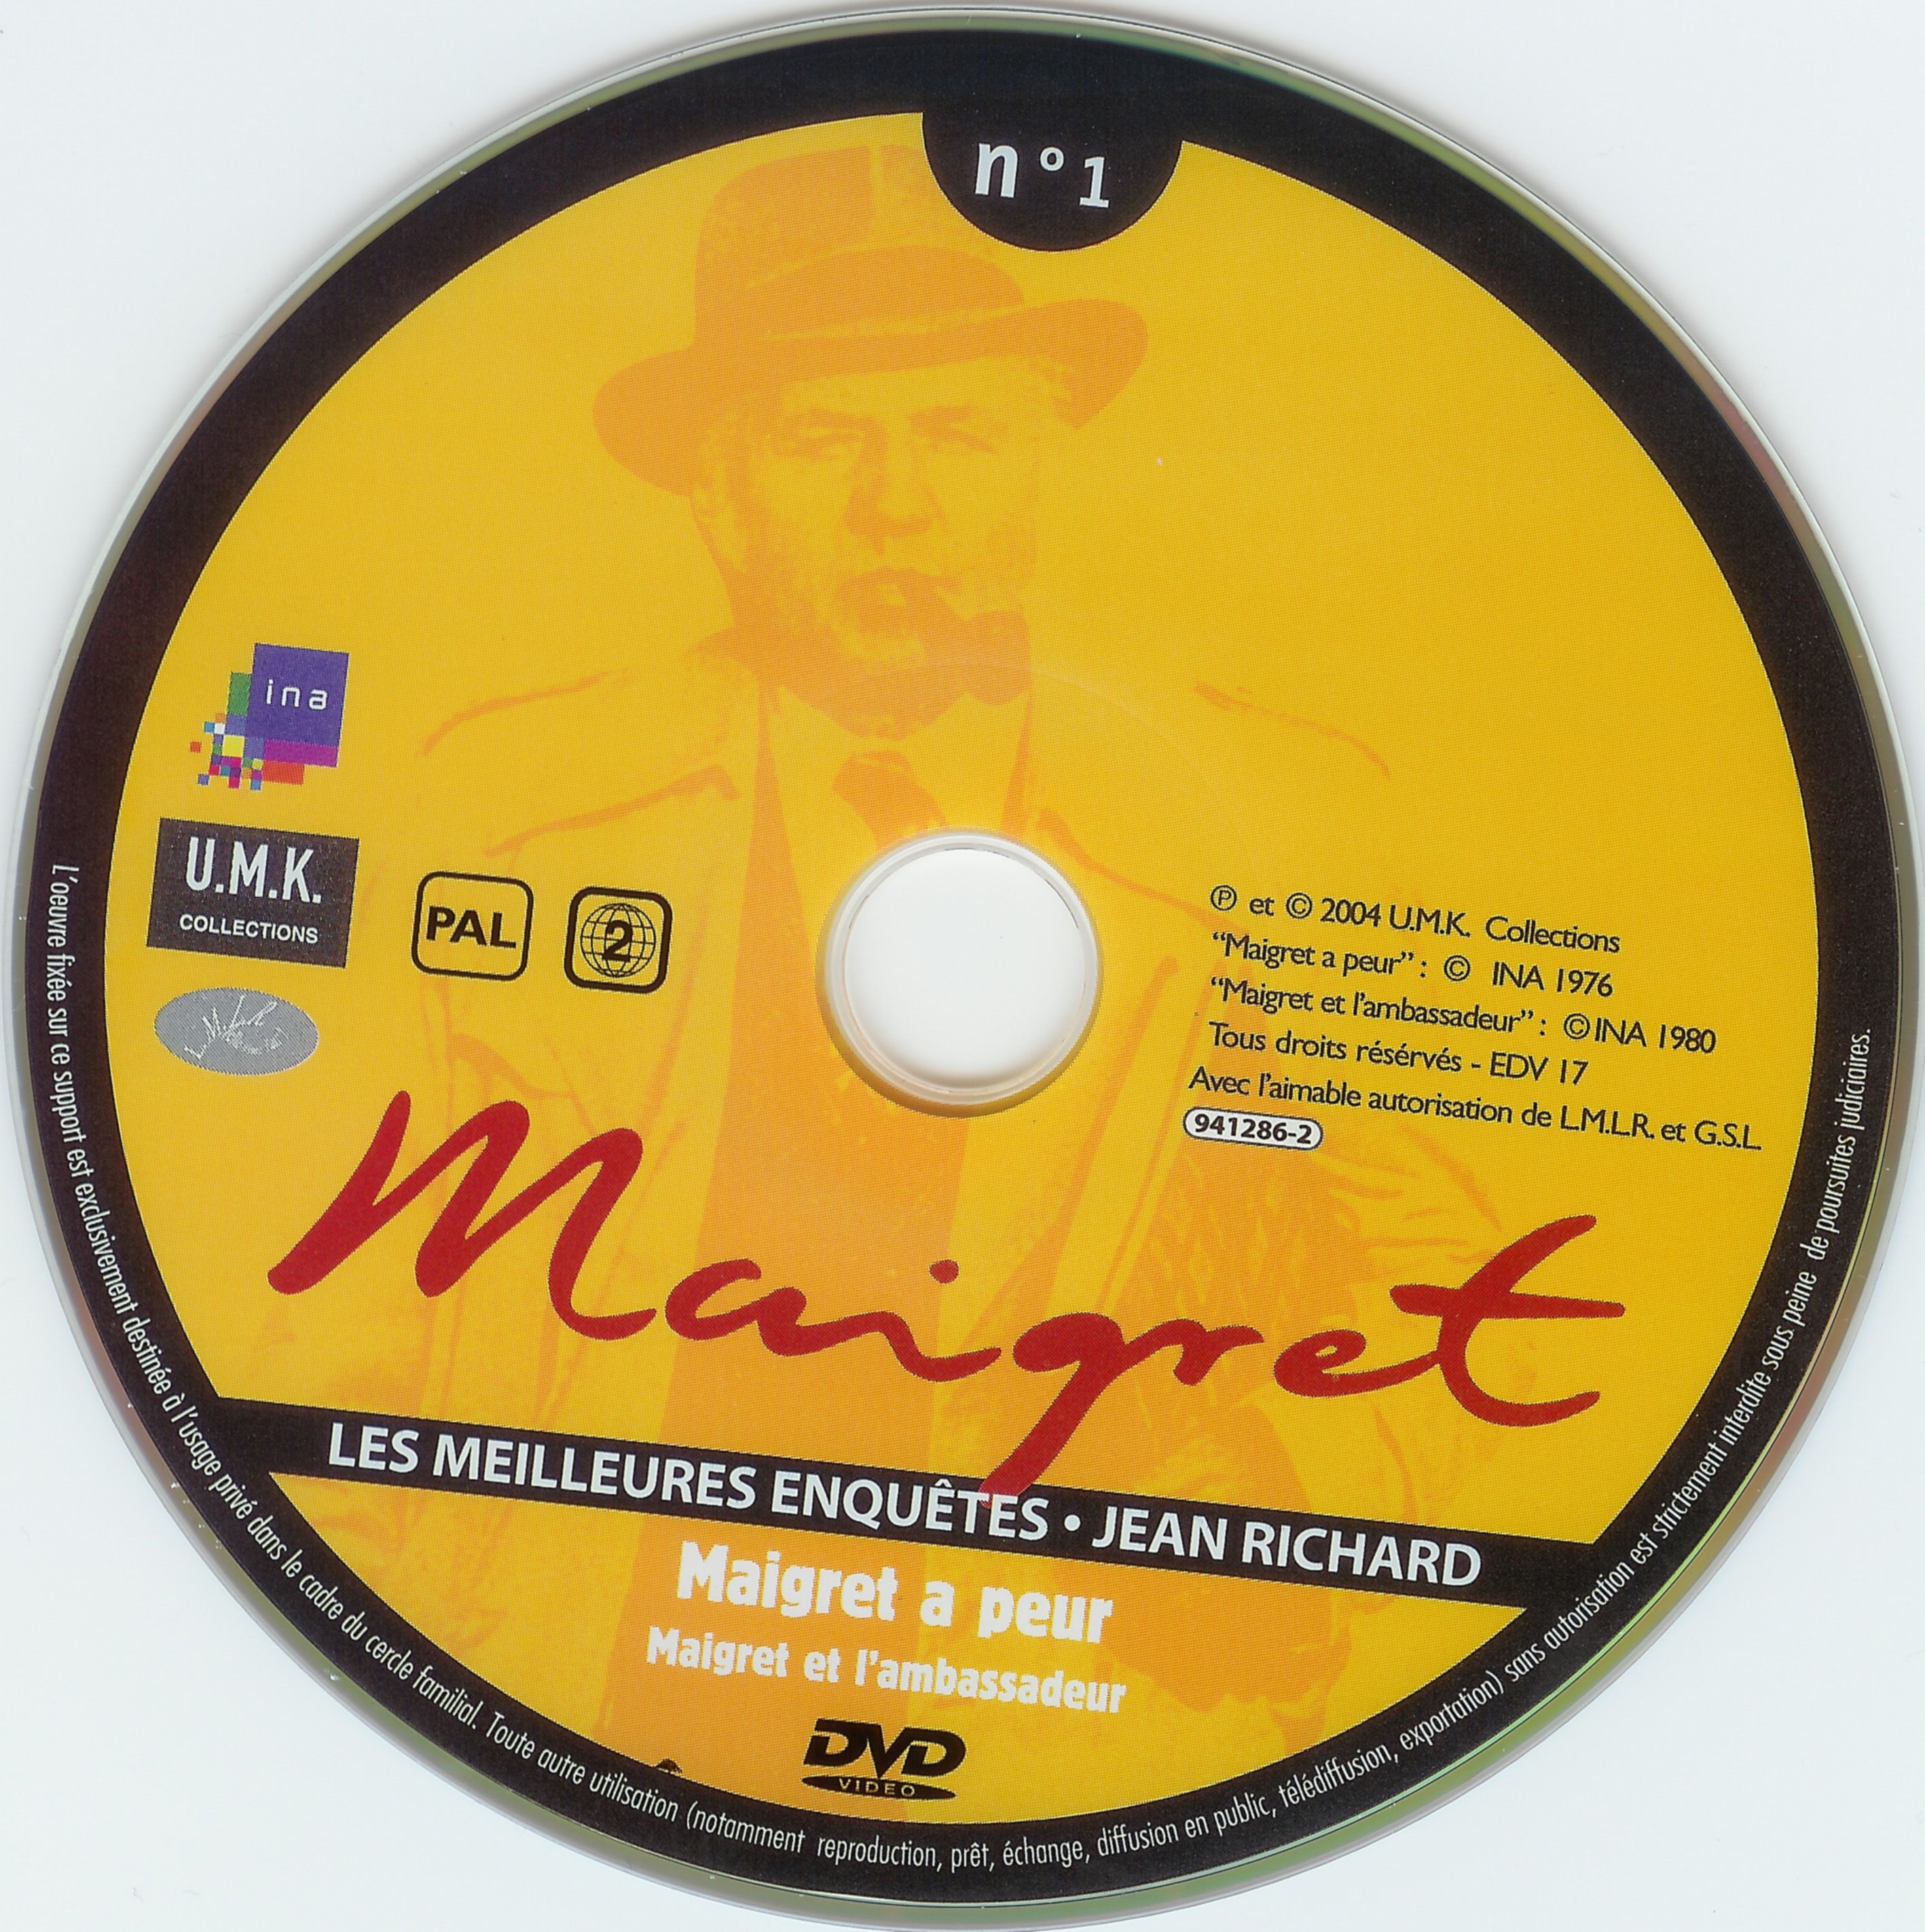 Maigret (Jean Richard) vol 01